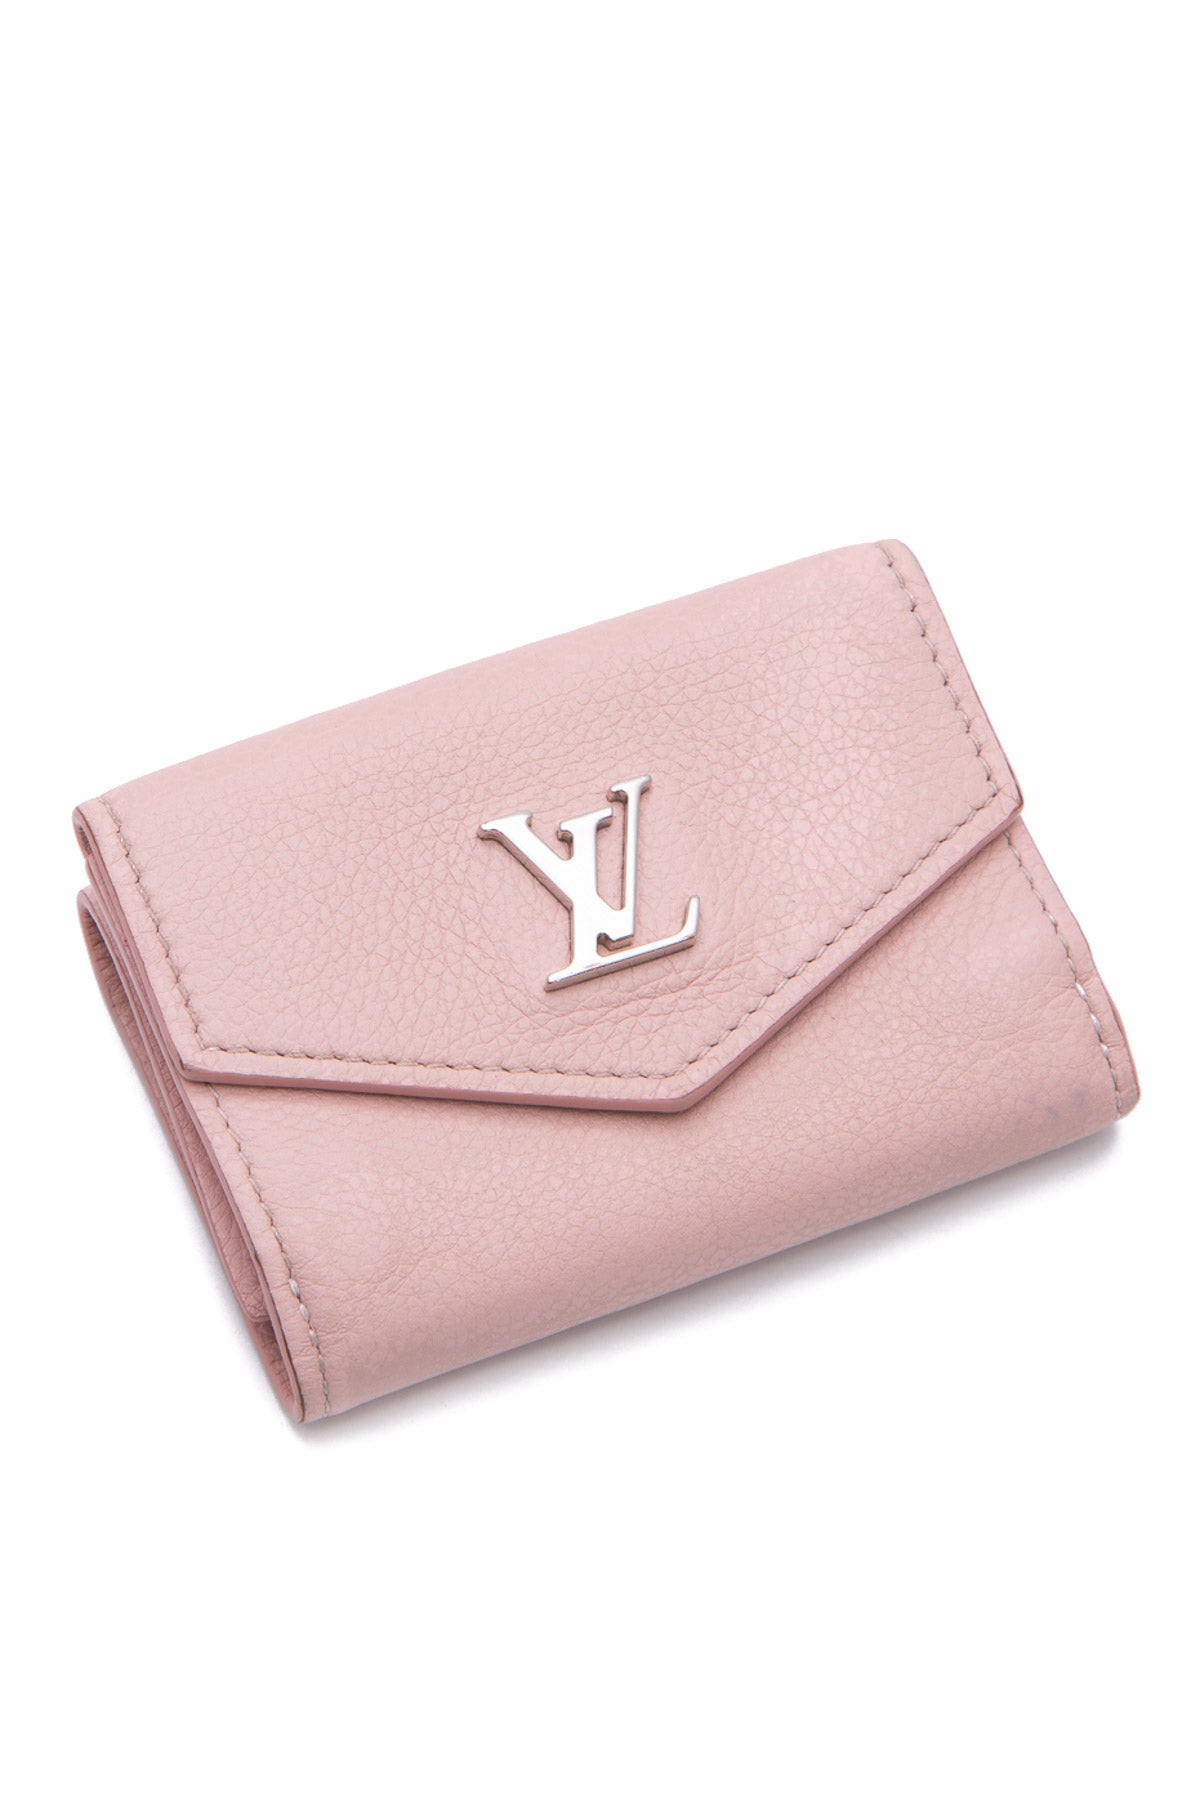 LOUIS VUITTON Metallic Calfskin Lockmini Wallet Pink 1252903